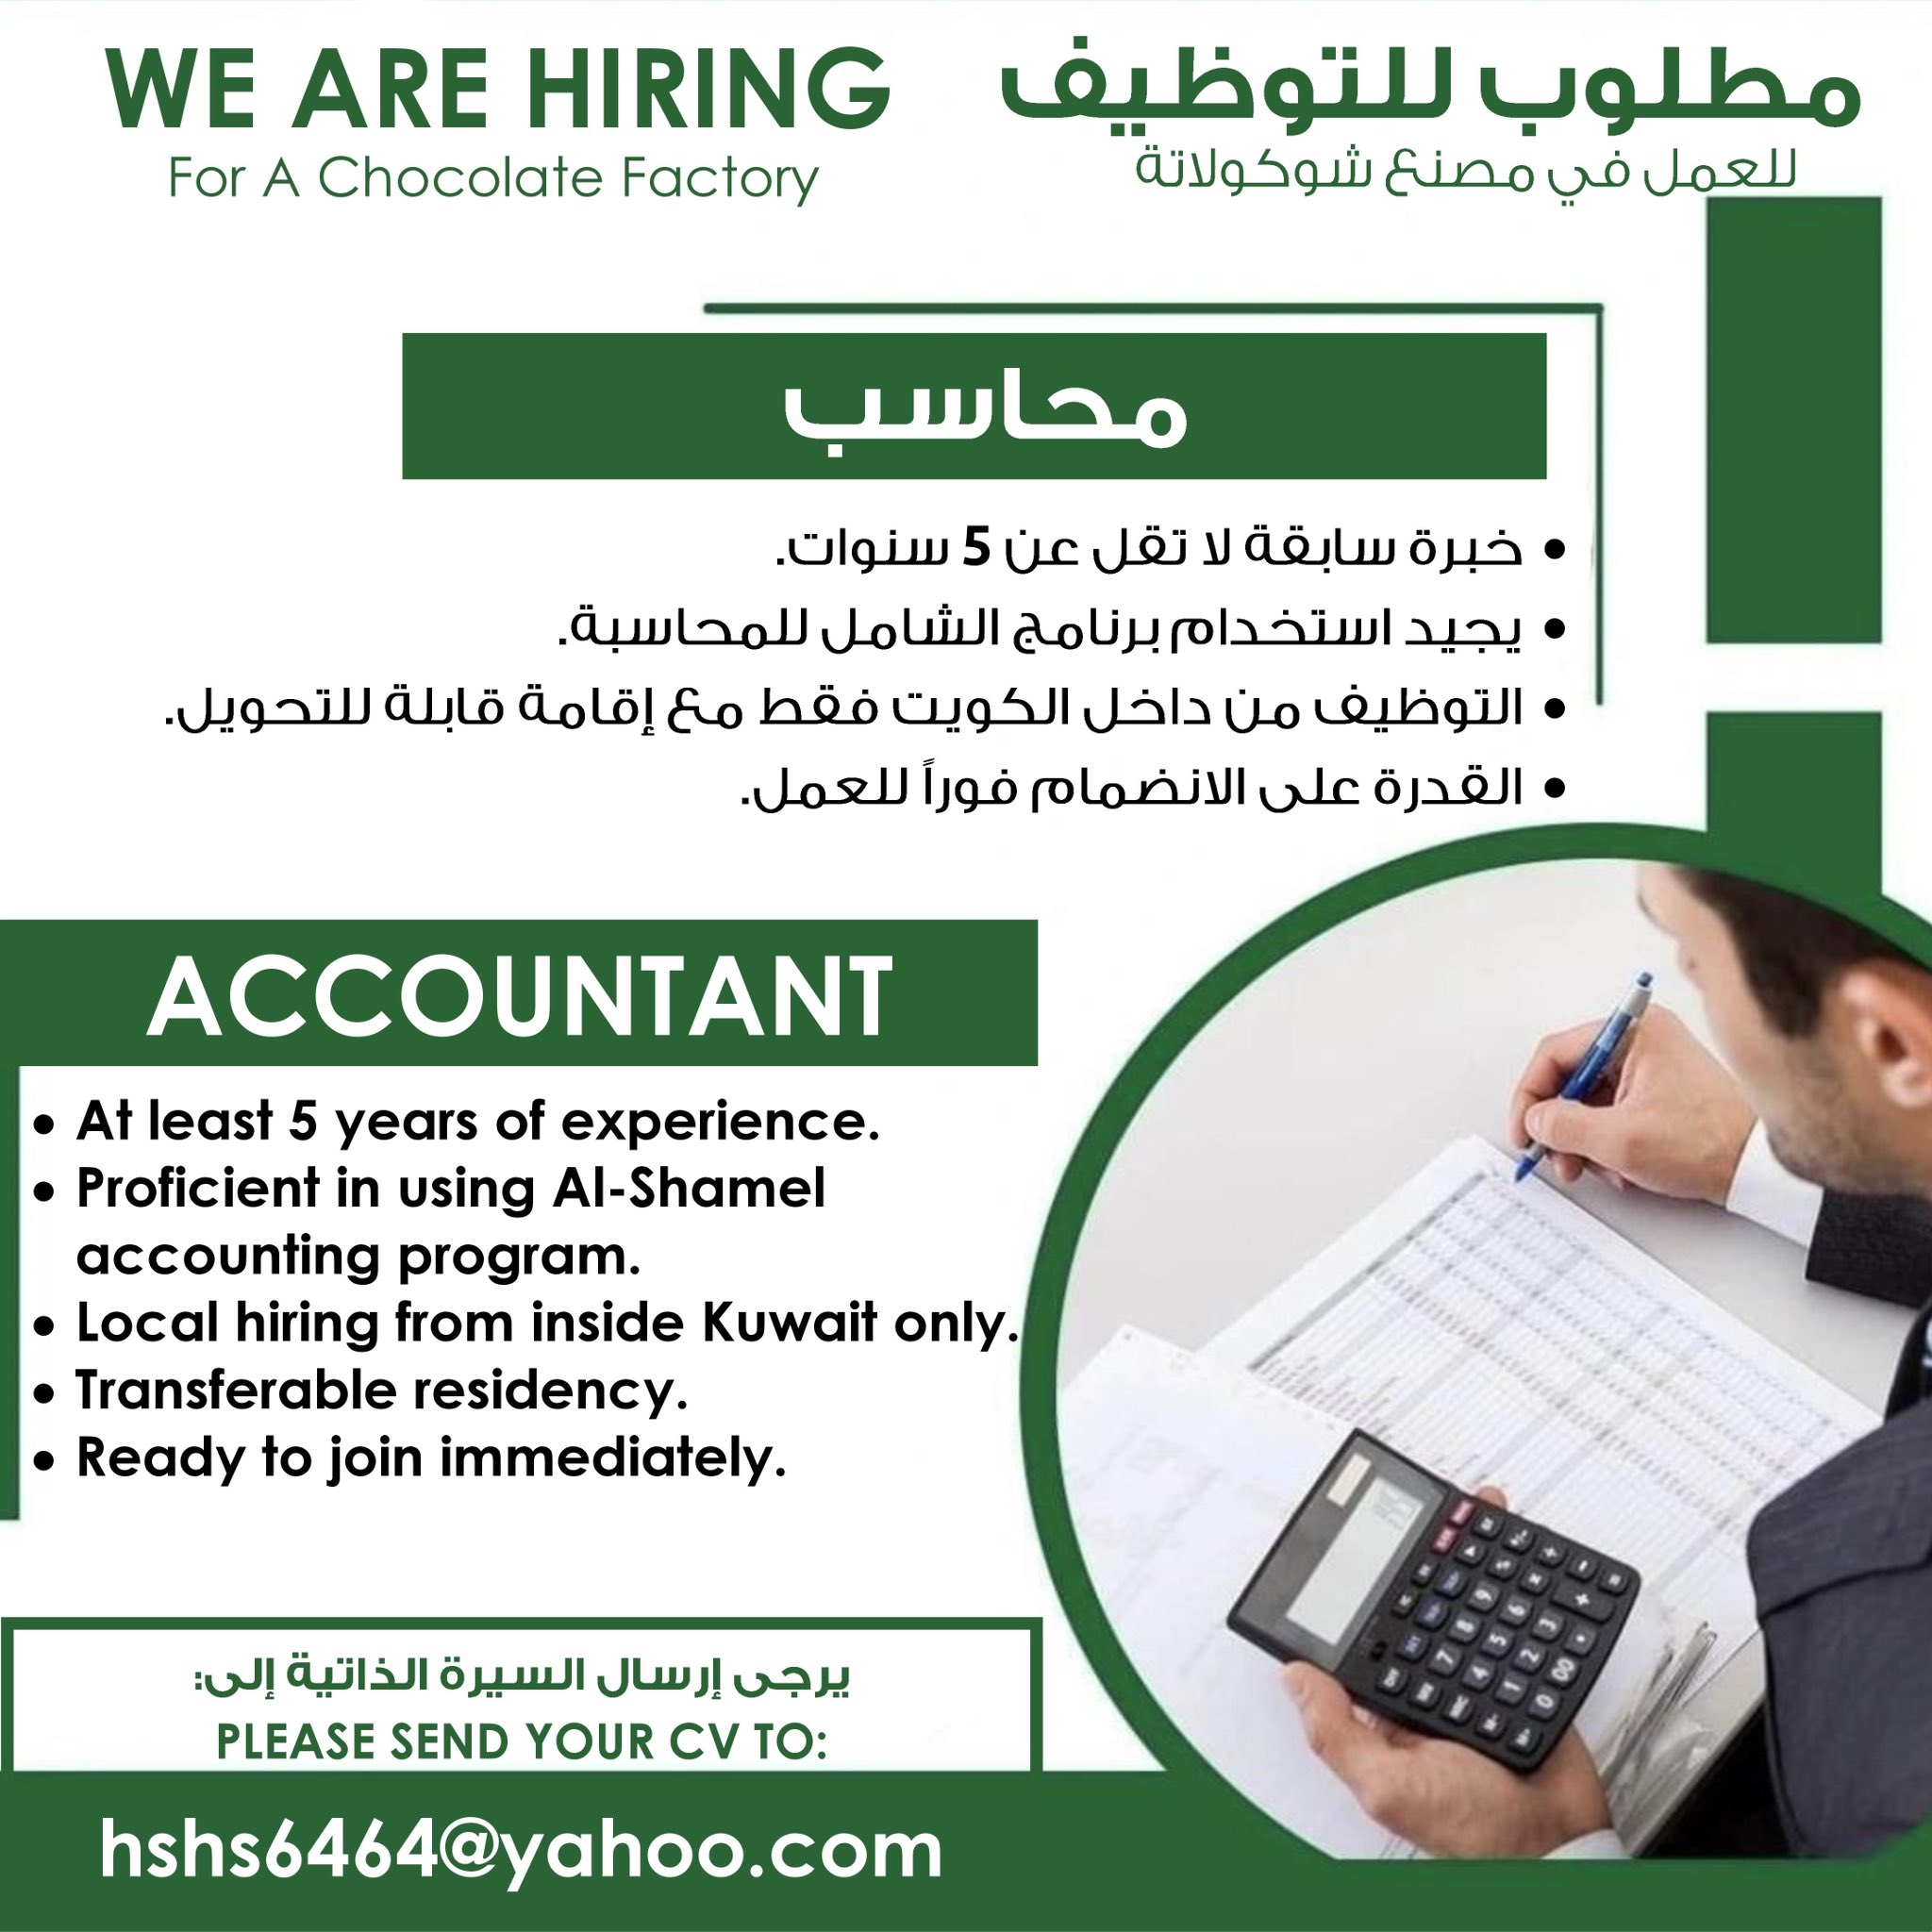 Ras Al Khaimah Jobs | iiQ8 Vacancies Safety Officer, Foreman - Production, Accountant